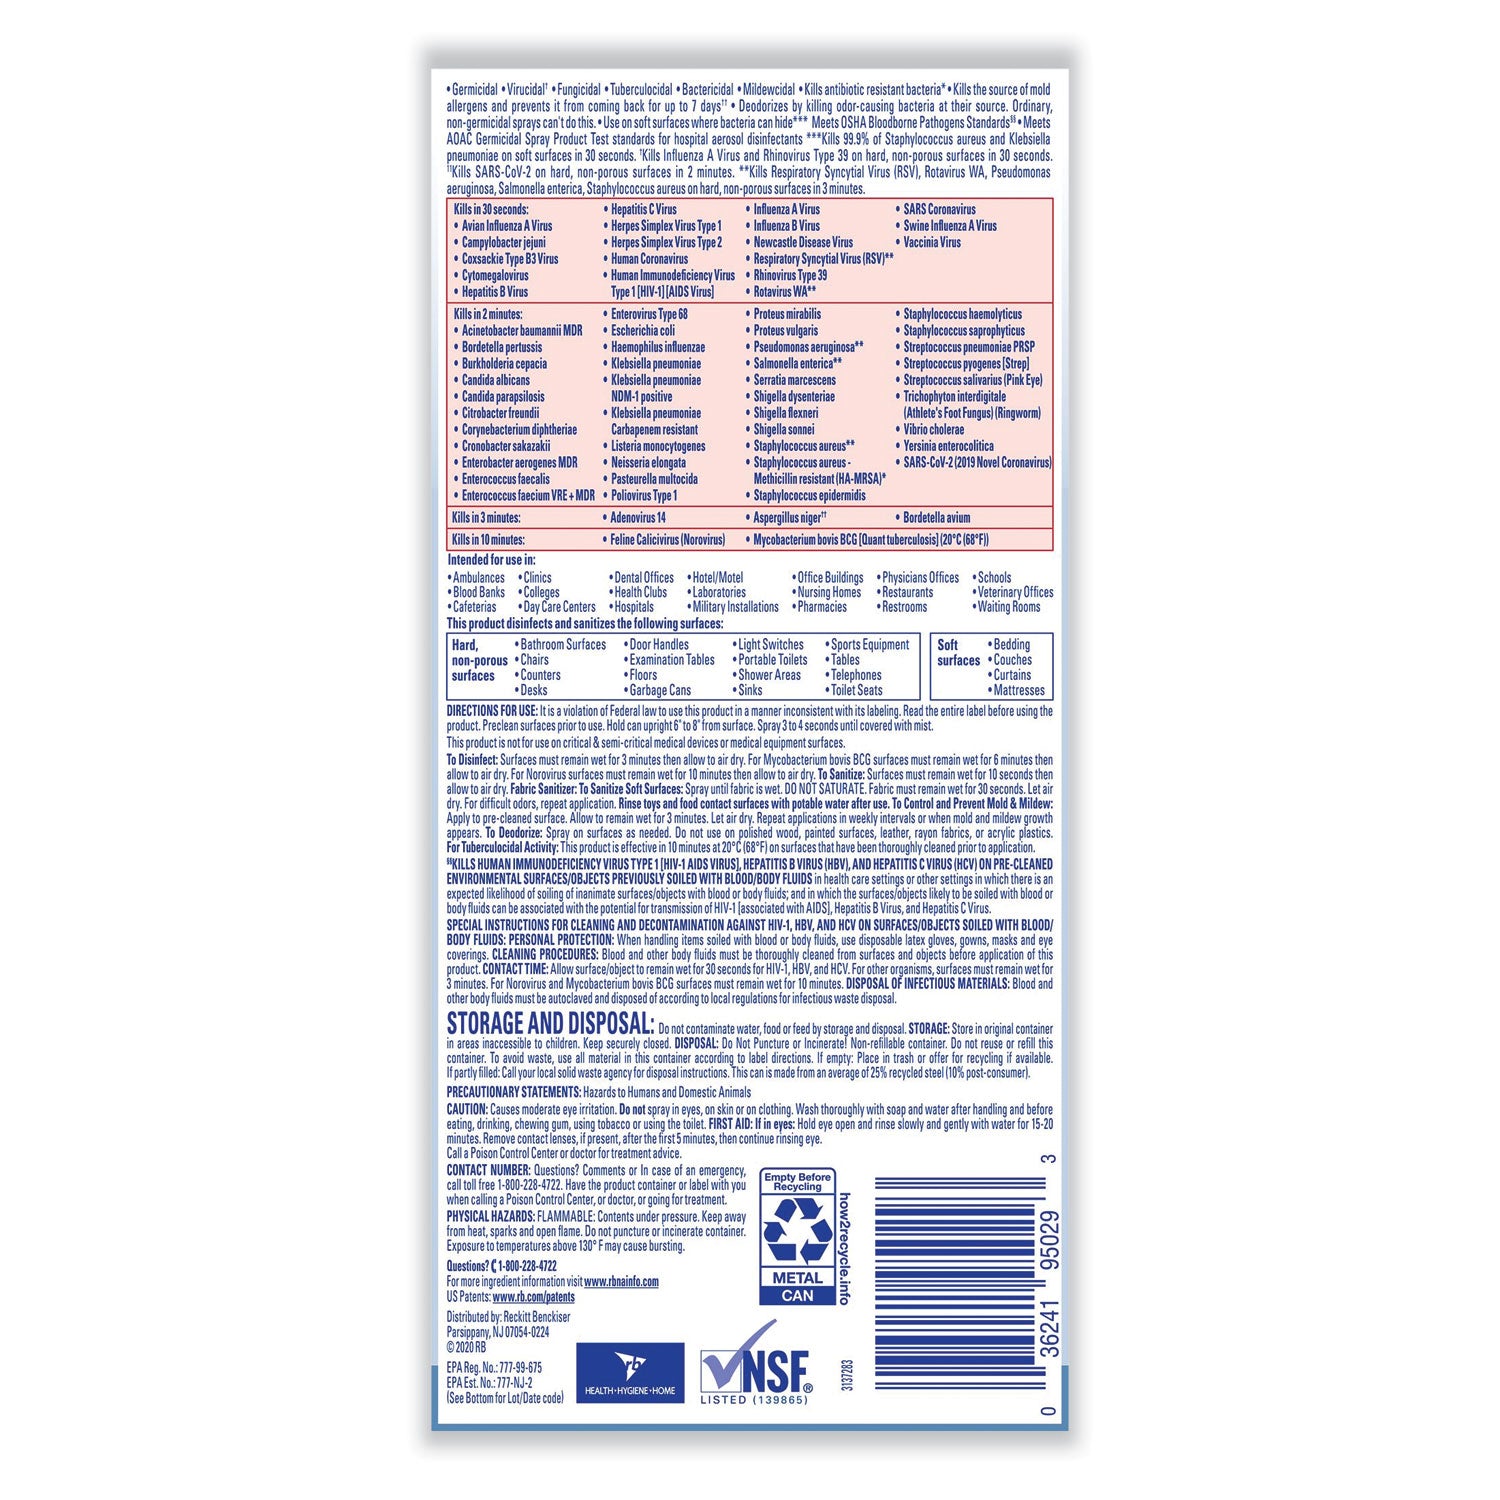 Disinfectant Spray, 19 oz Aerosol Spray, 12/Carton - 